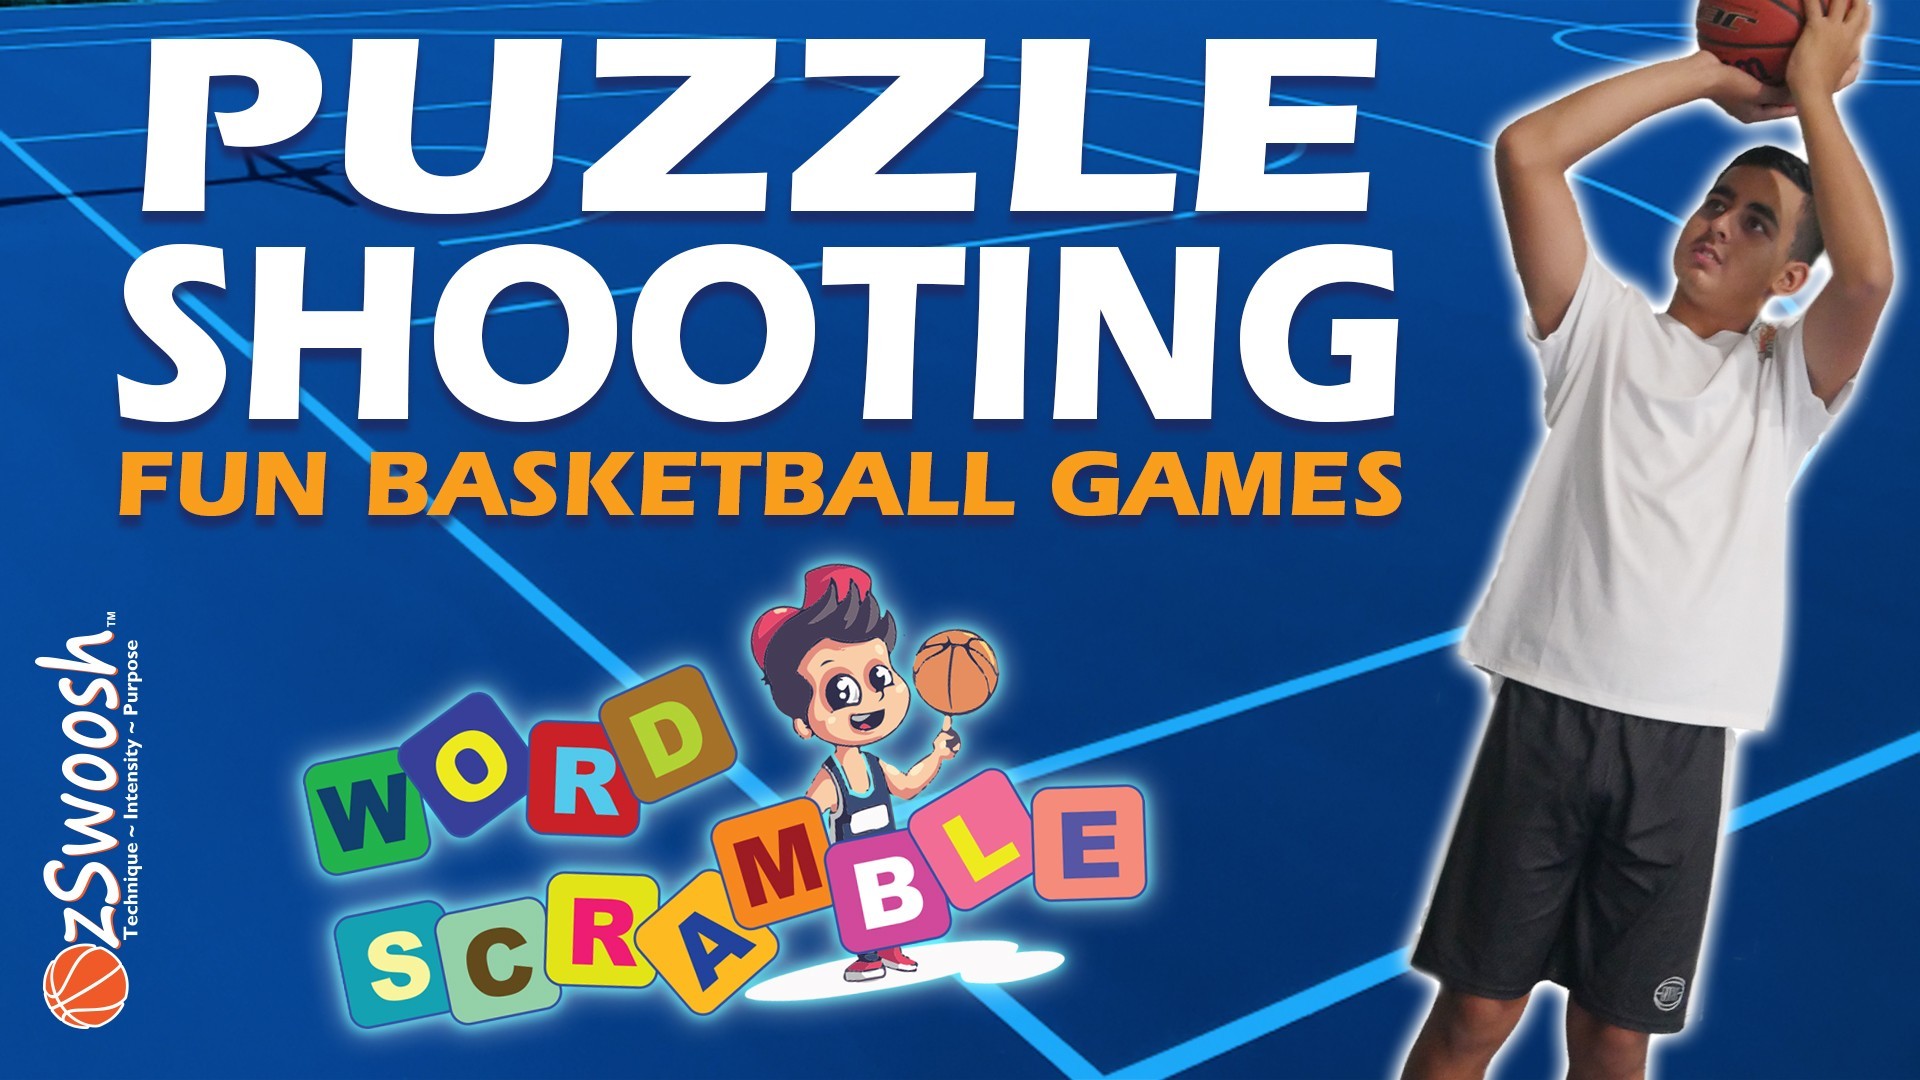 Fun Basketball Shooting Game For Kids - Word Scramble